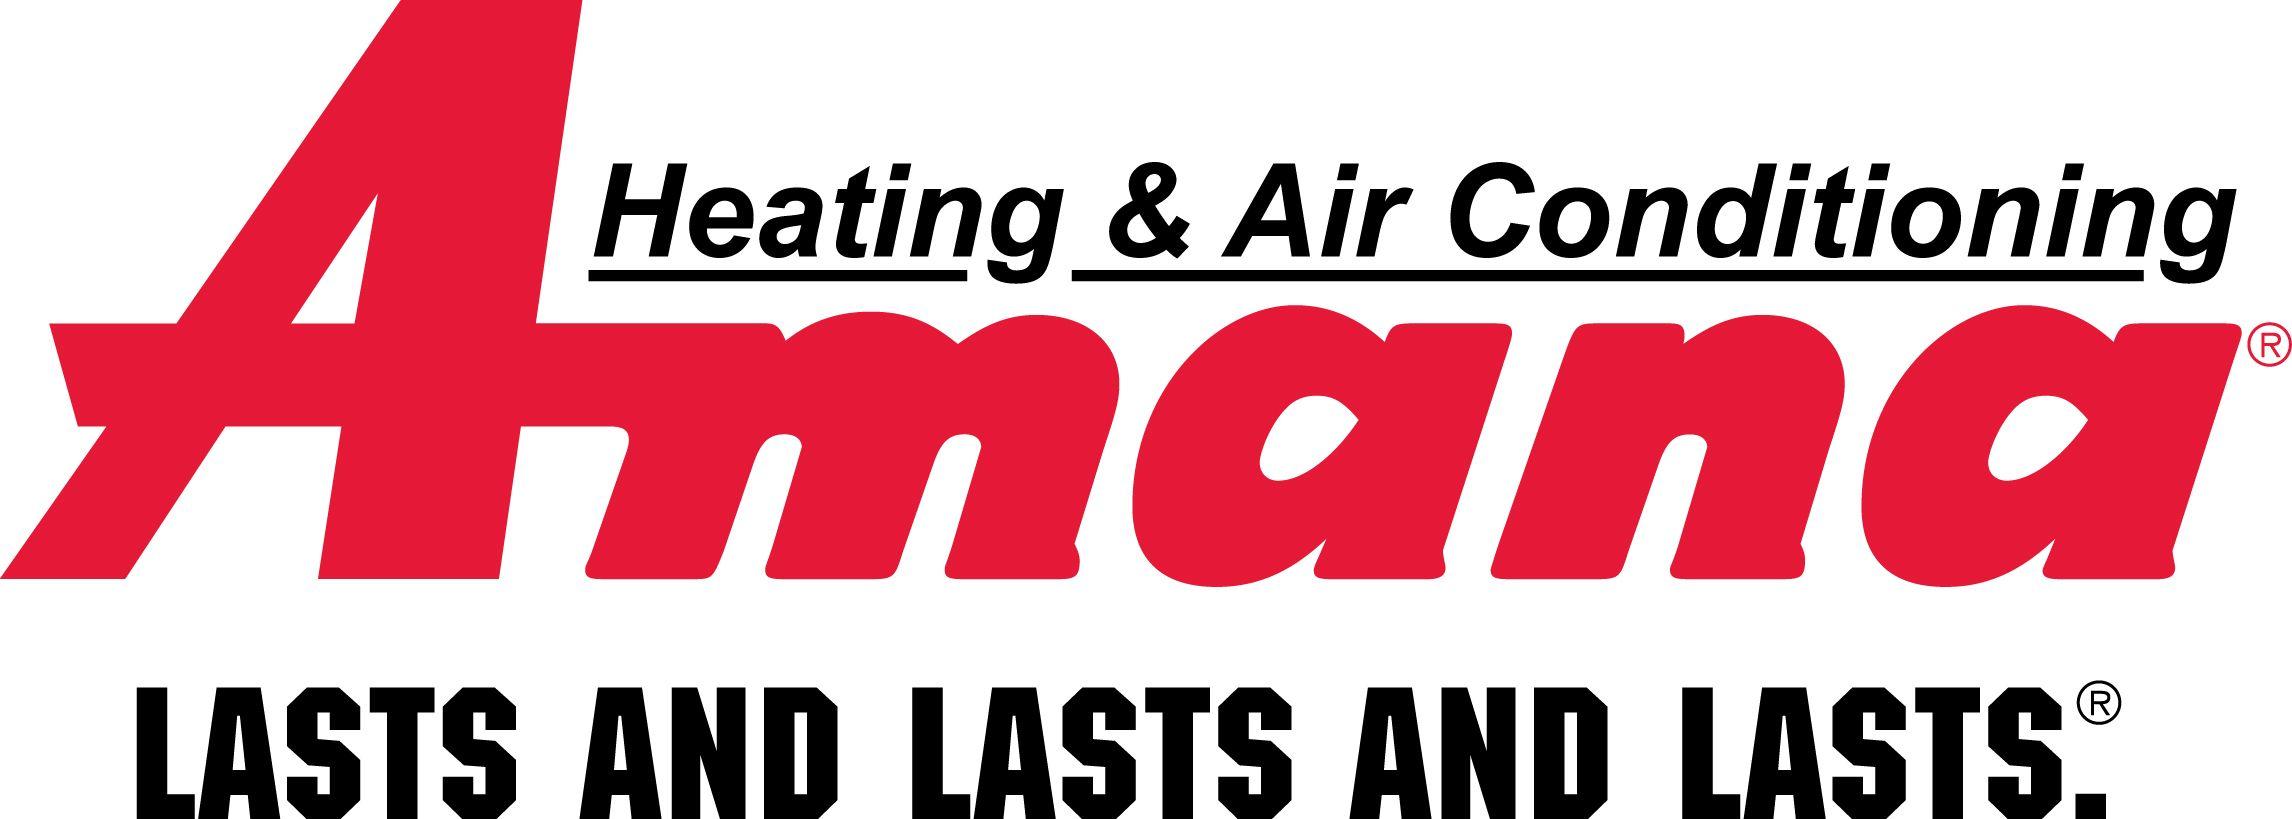 Amana Heating and Air Logo - Amana Heating Air Conditioning - Zilka Heating and Cooling